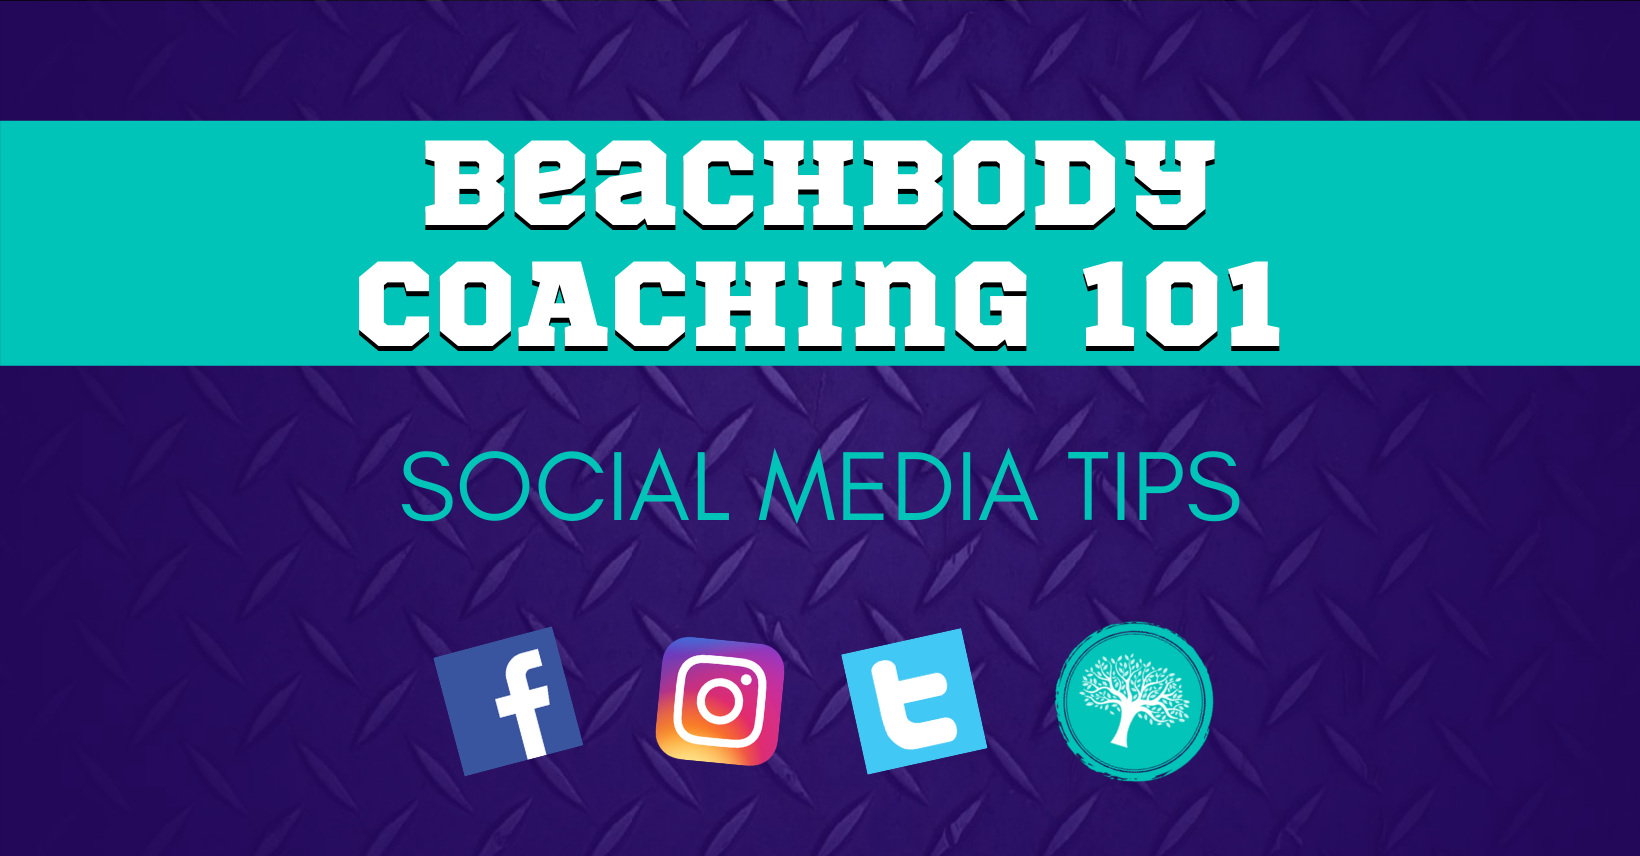 BEACHBODY COACHING 101: Social Media Tips - Enchanted Life Wellness -  Tabitha Goodman